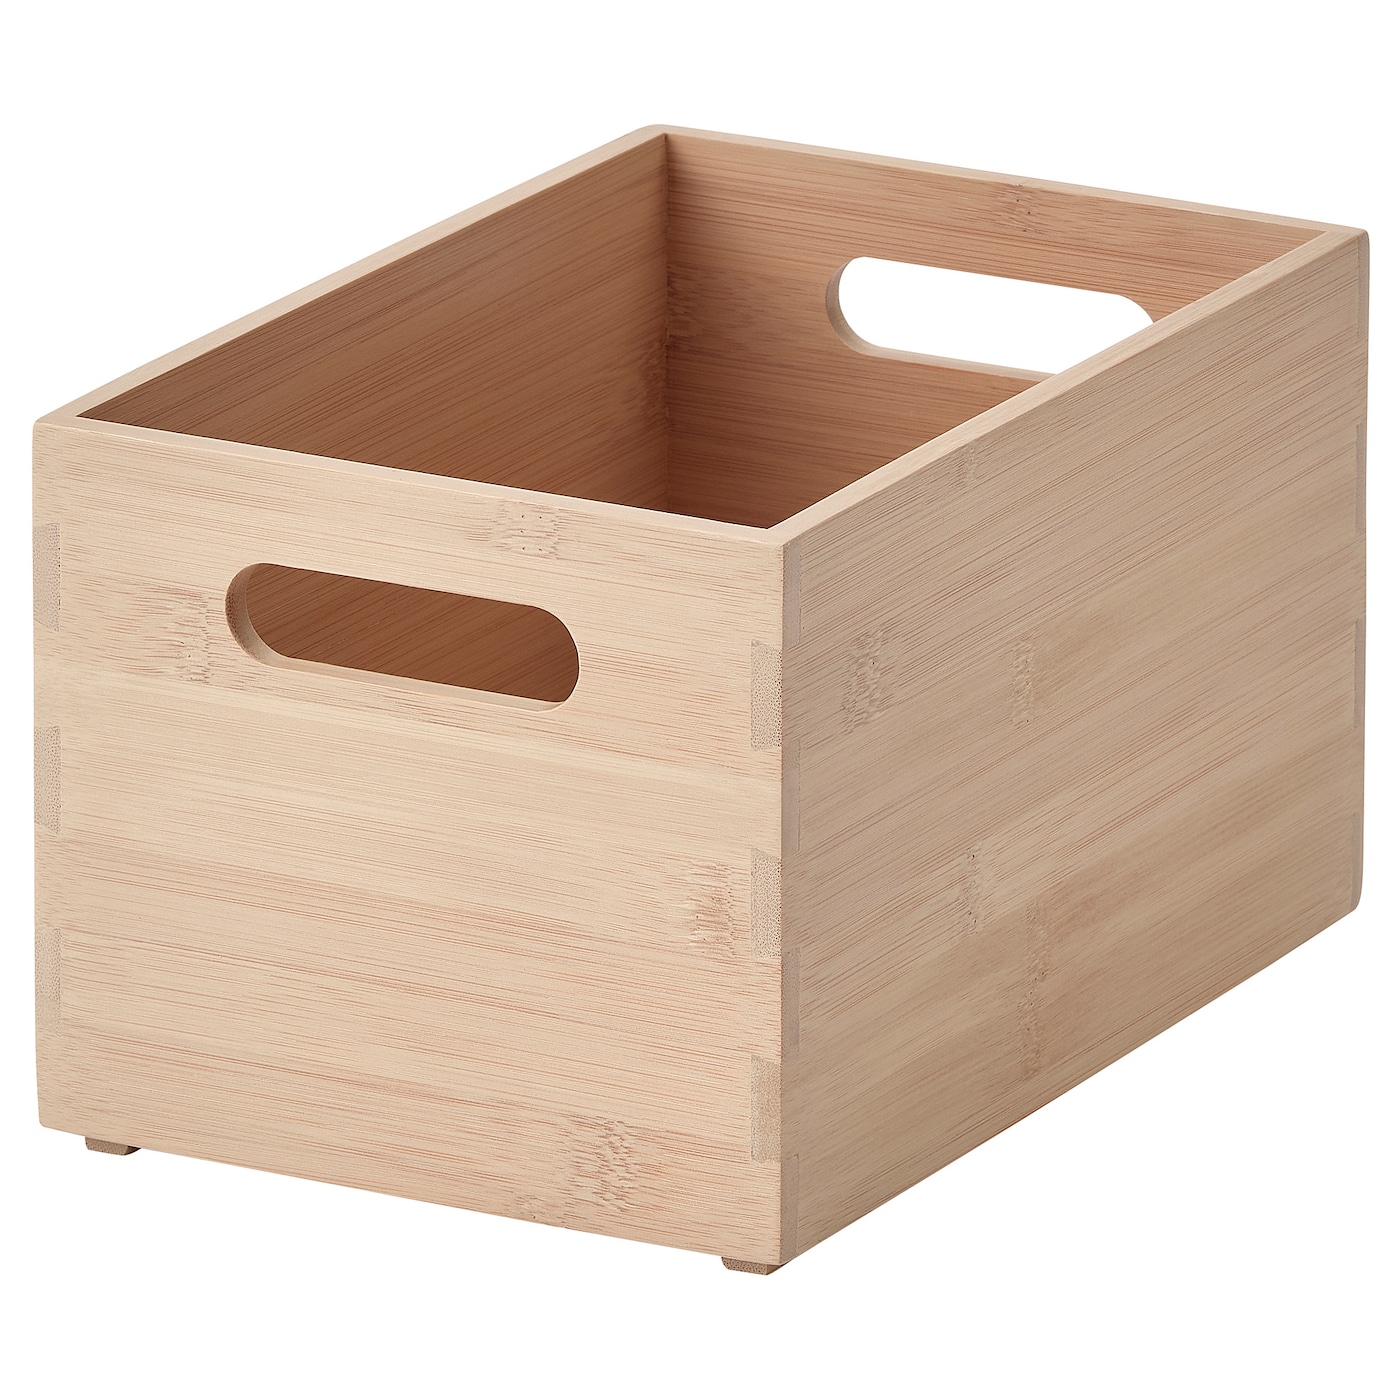 Ящик для хранения - UPPDATERA IKEA/УППДАТЕРА ИКЕА, 16x24x15 см, бежевый